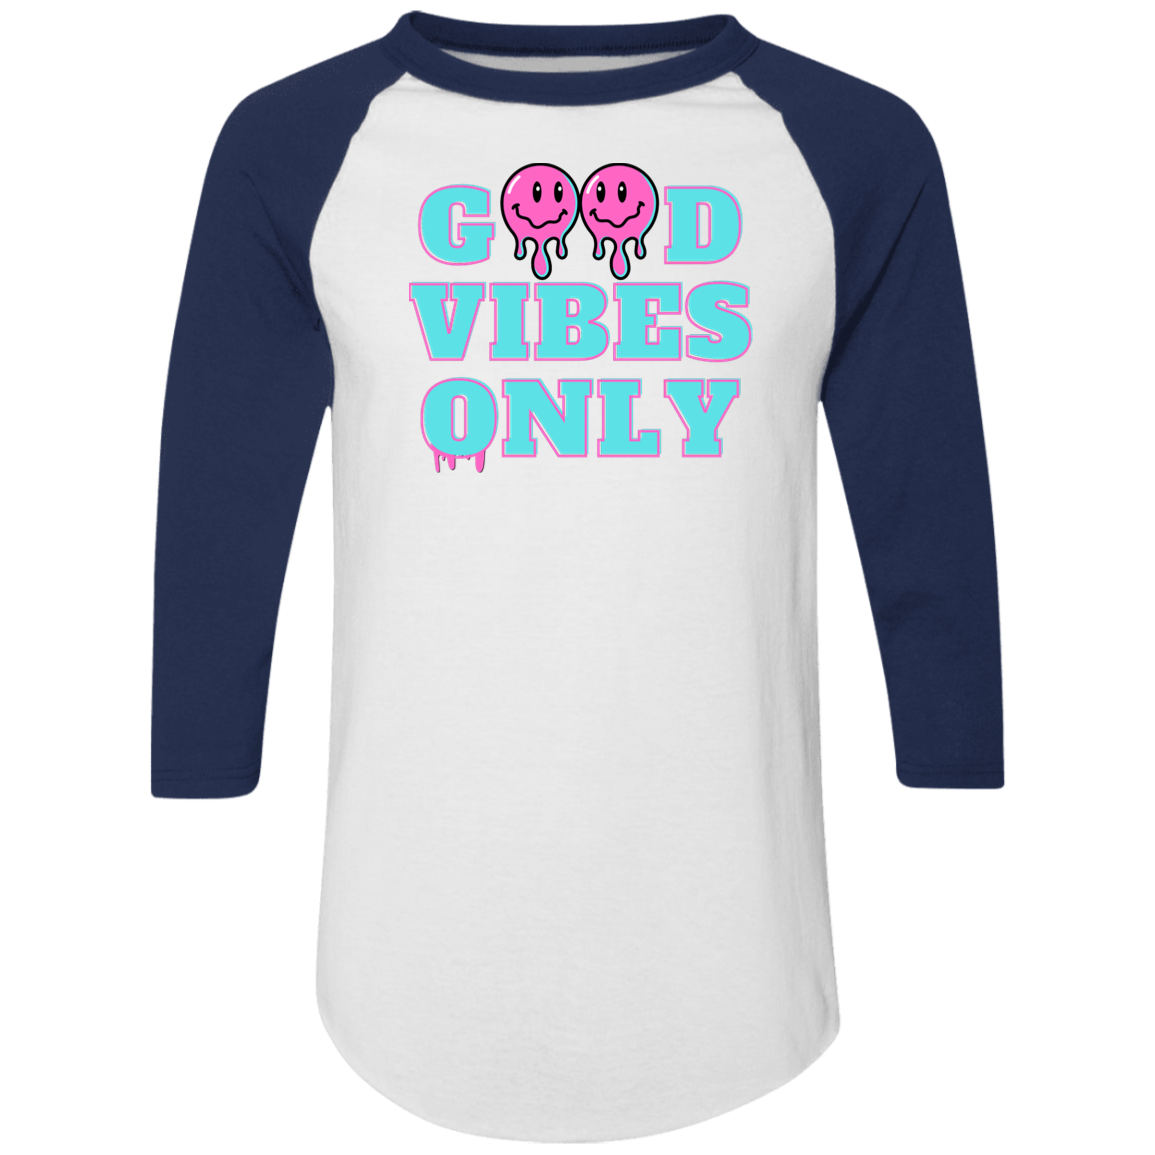 Good Vibes Only - Camiseta raglán con bloques de color para hombre